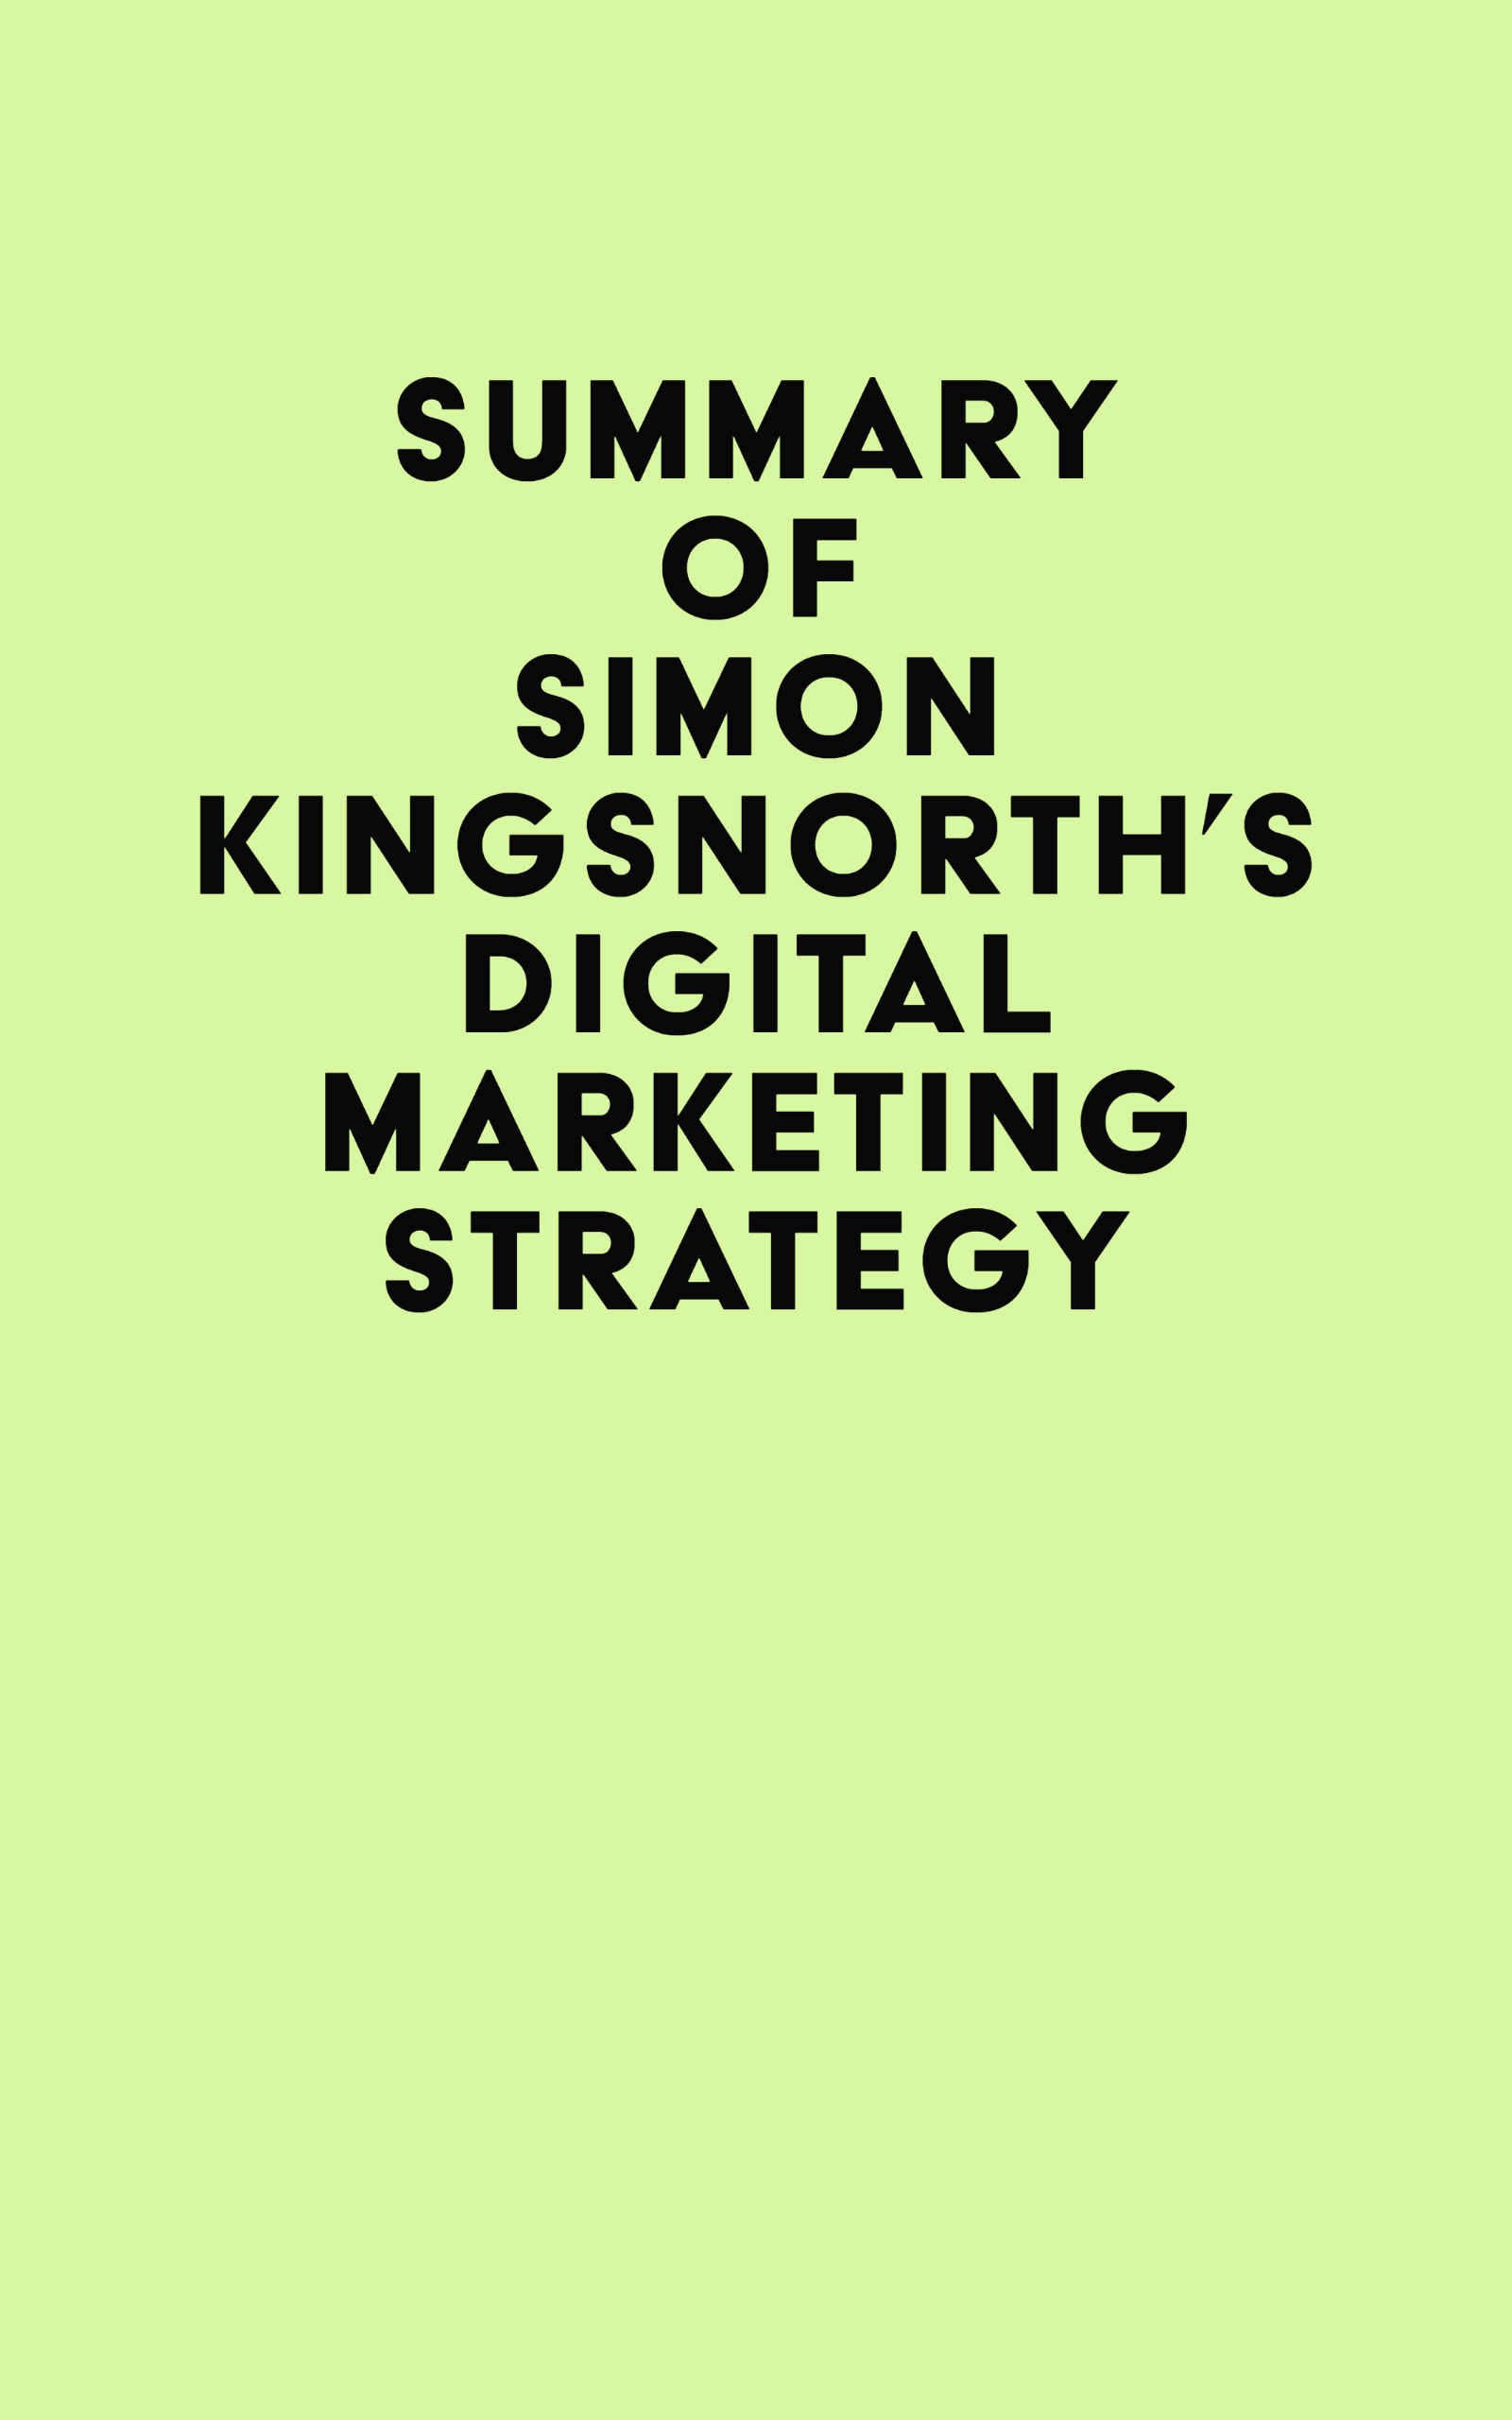 Summary of Simon Kingsnorth's Digital Marketing Strategy